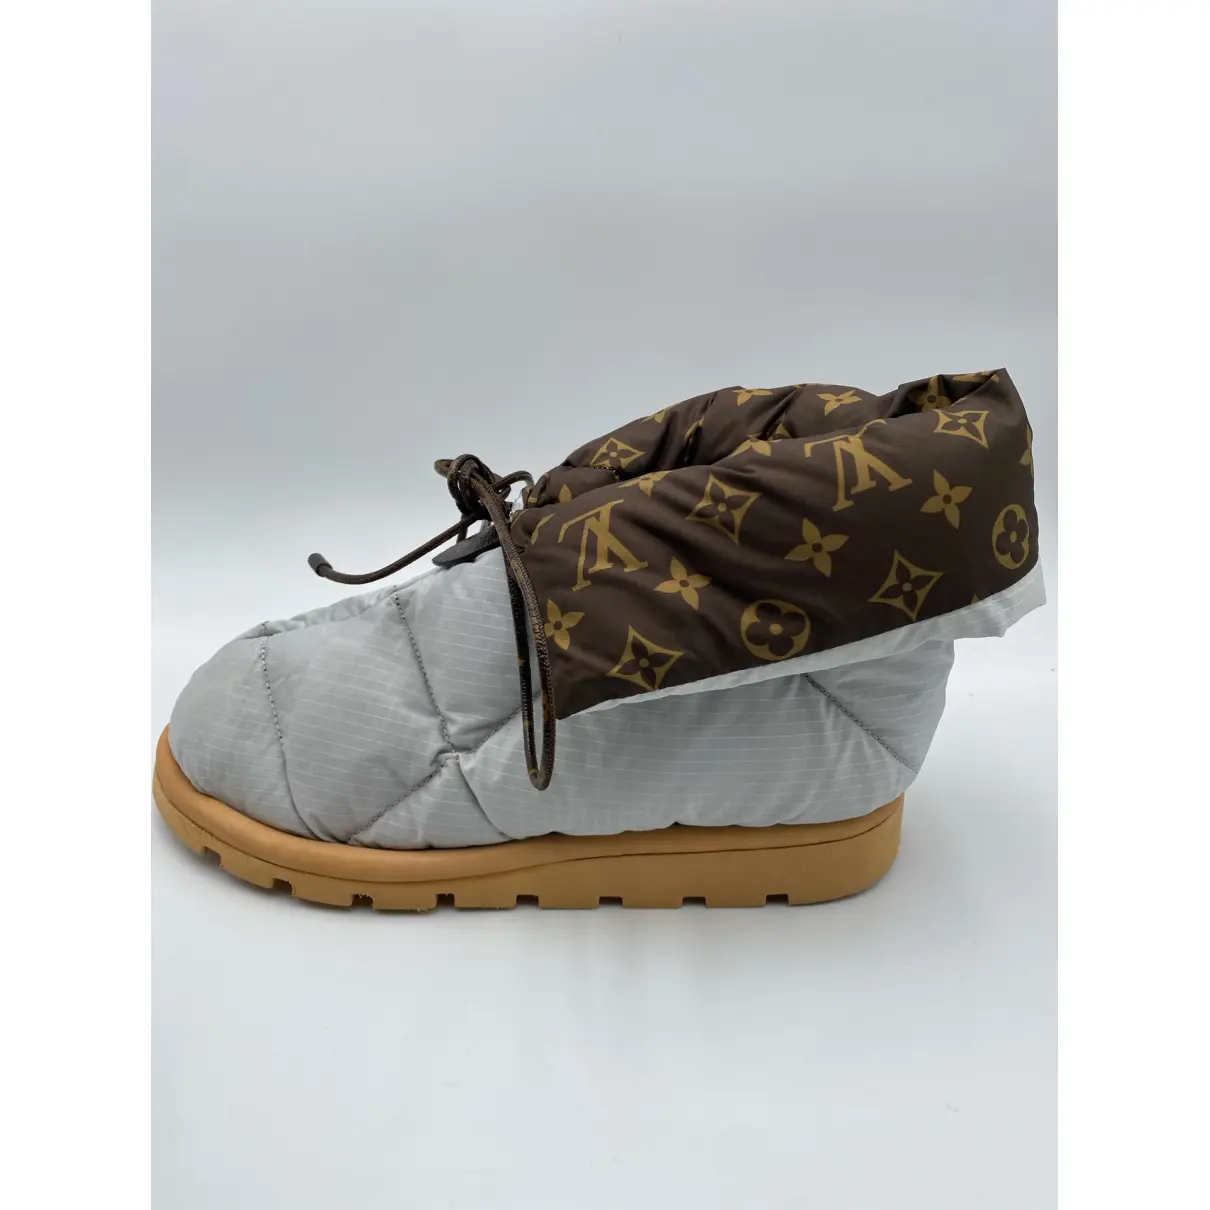 Buy Louis Vuitton Pillow cloth ankle boots online